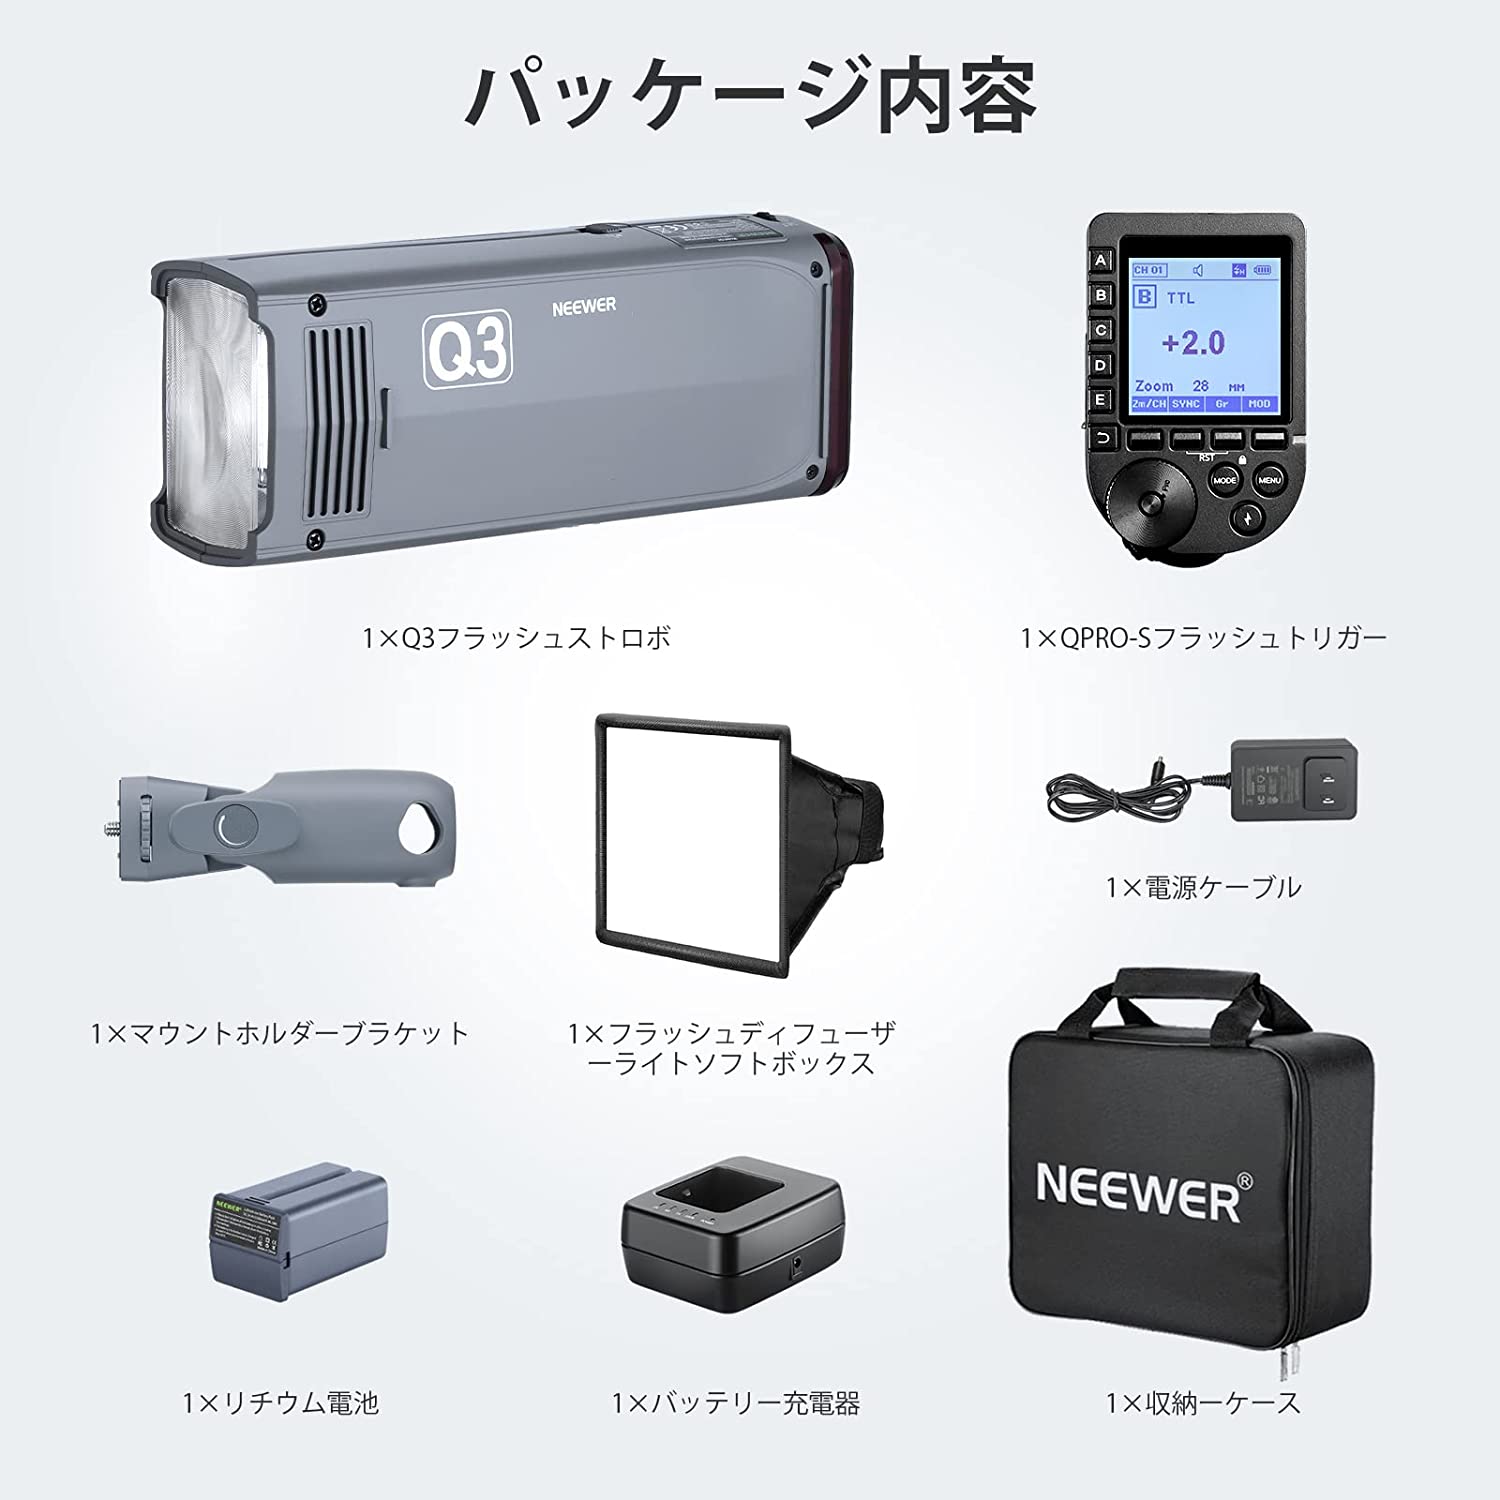 NEEWER JAPAN 公式サイト|プロ写真・撮影機材専門店. NEEWER Q3 200Ws 